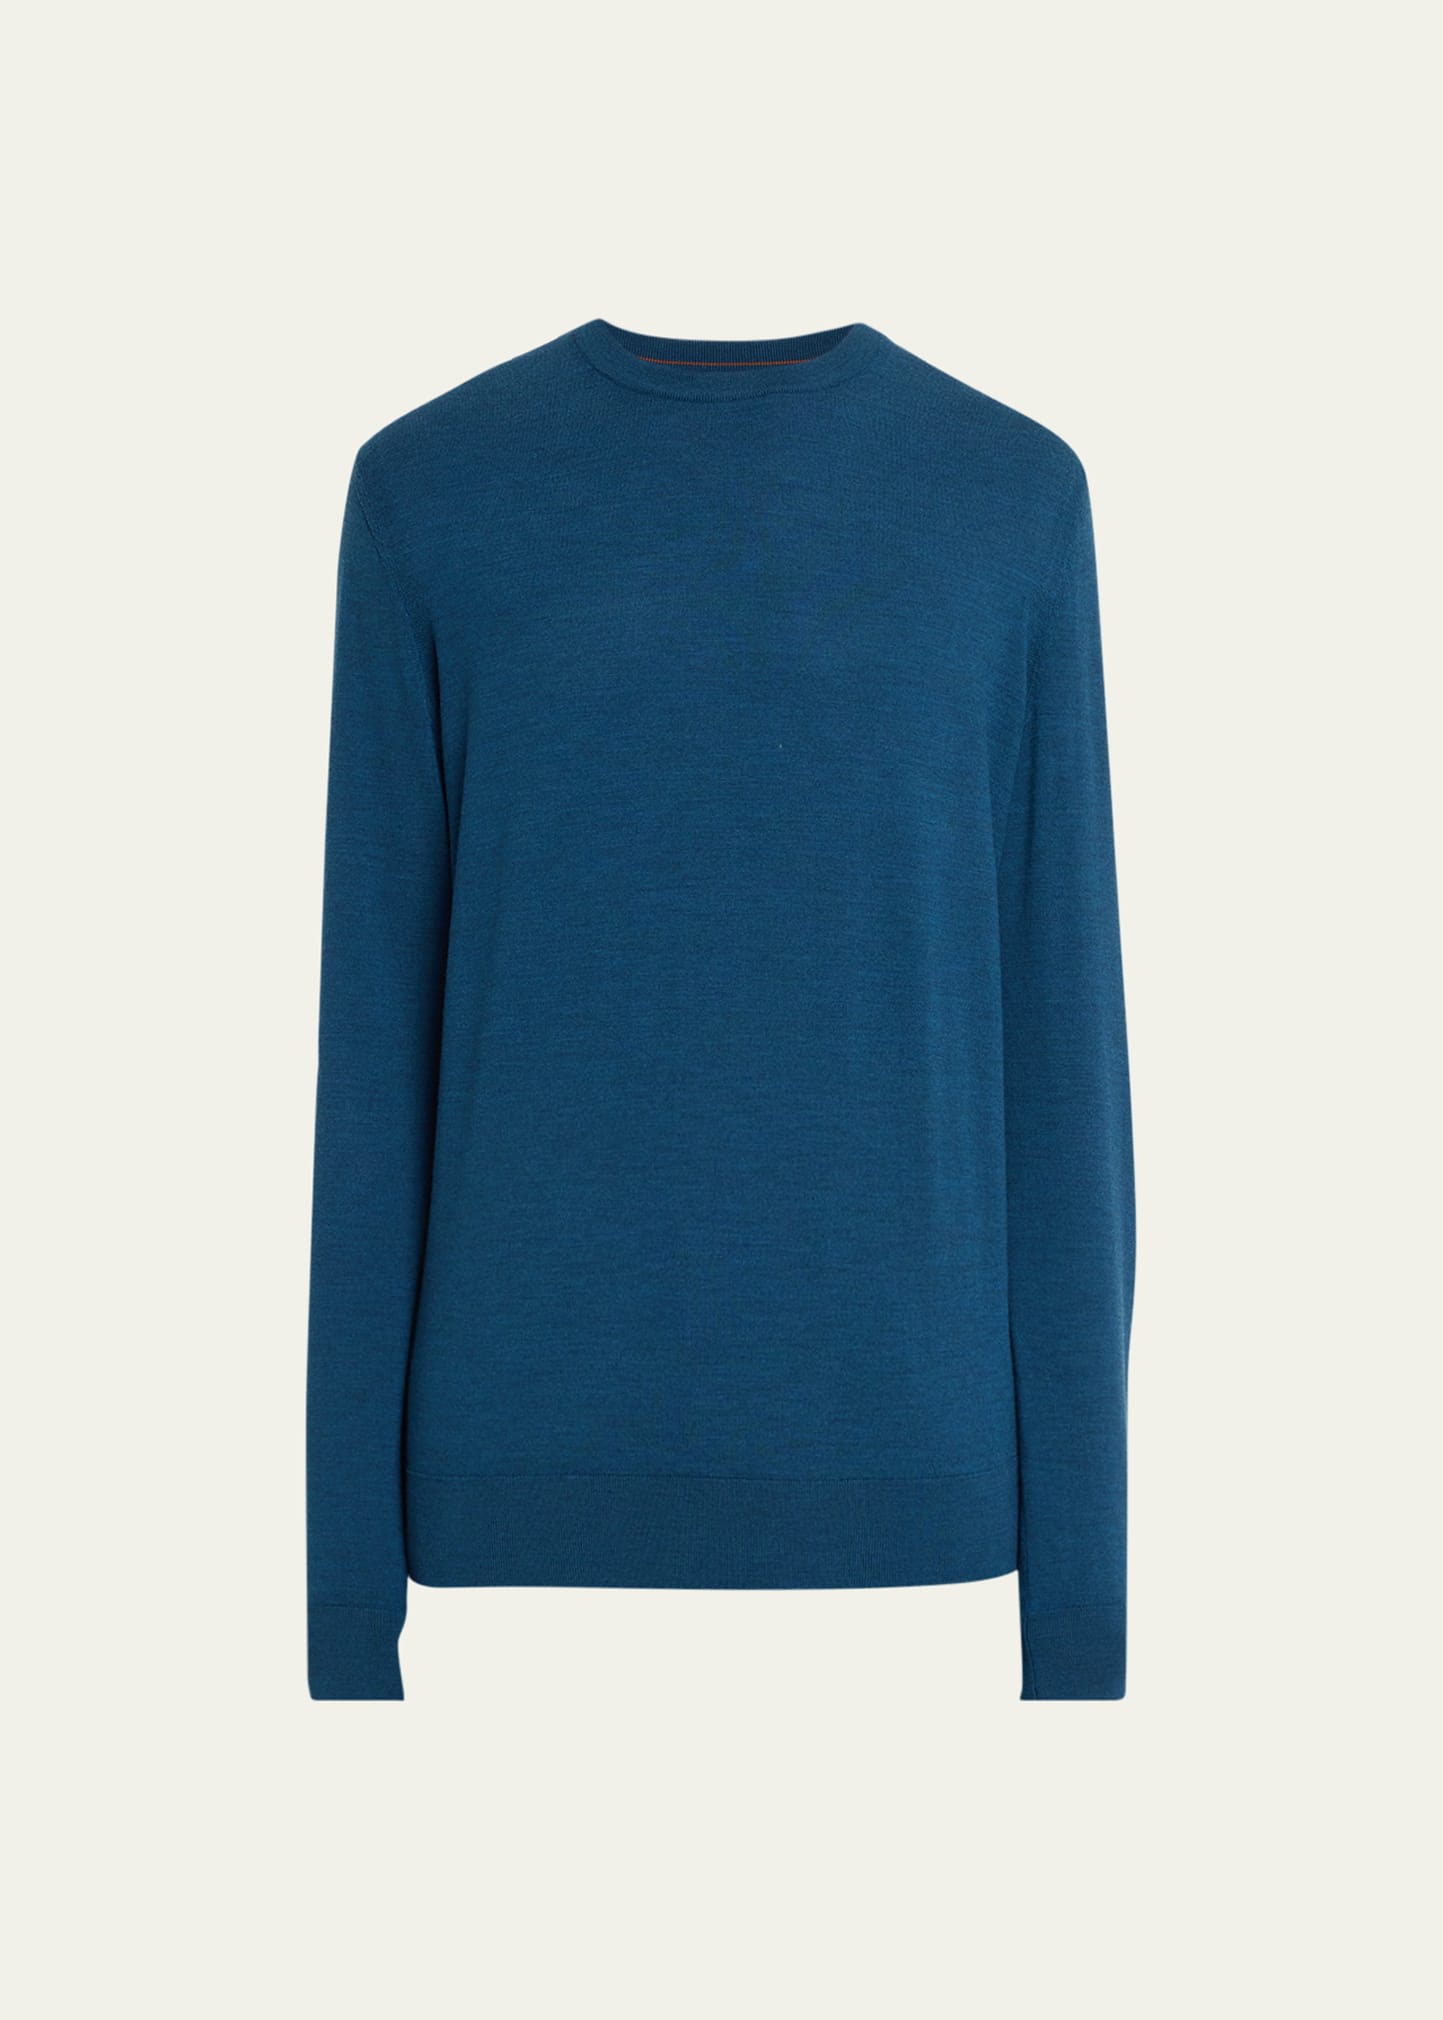 Zegna Men's 12milmil12 Wool Crewneck Sweater In Md Blu Sld